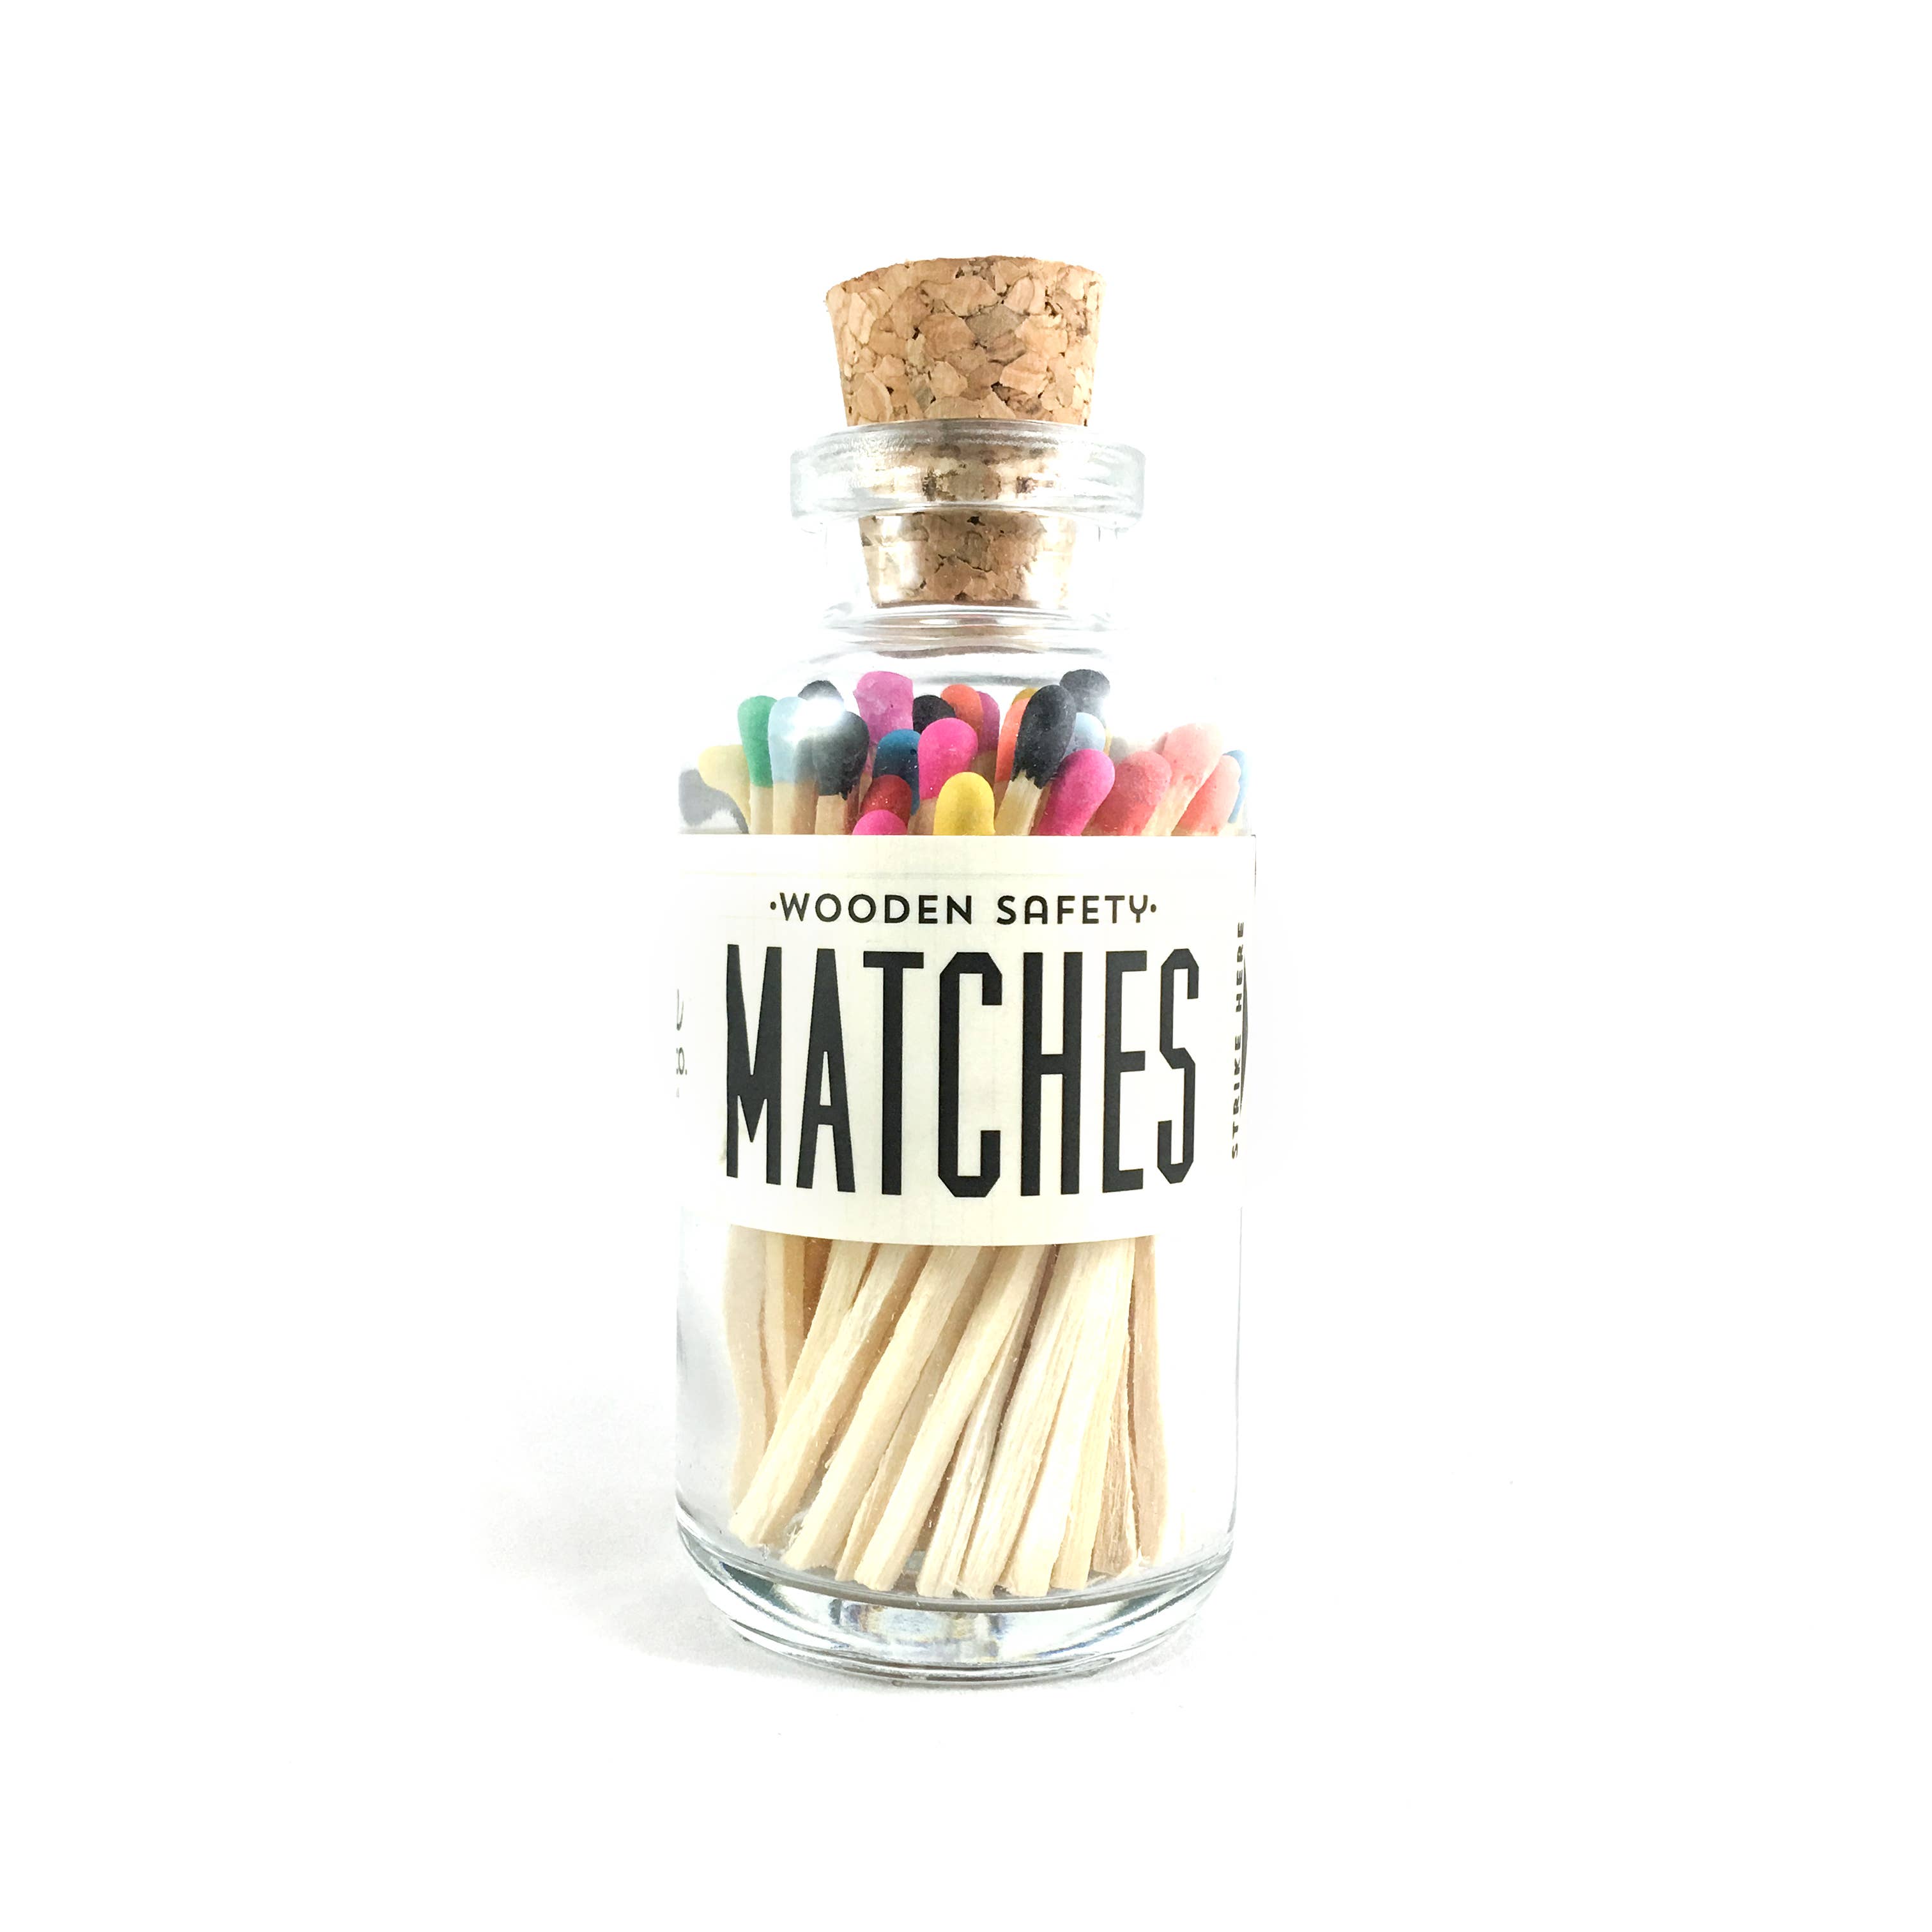 Small Jar of Matches - Proper